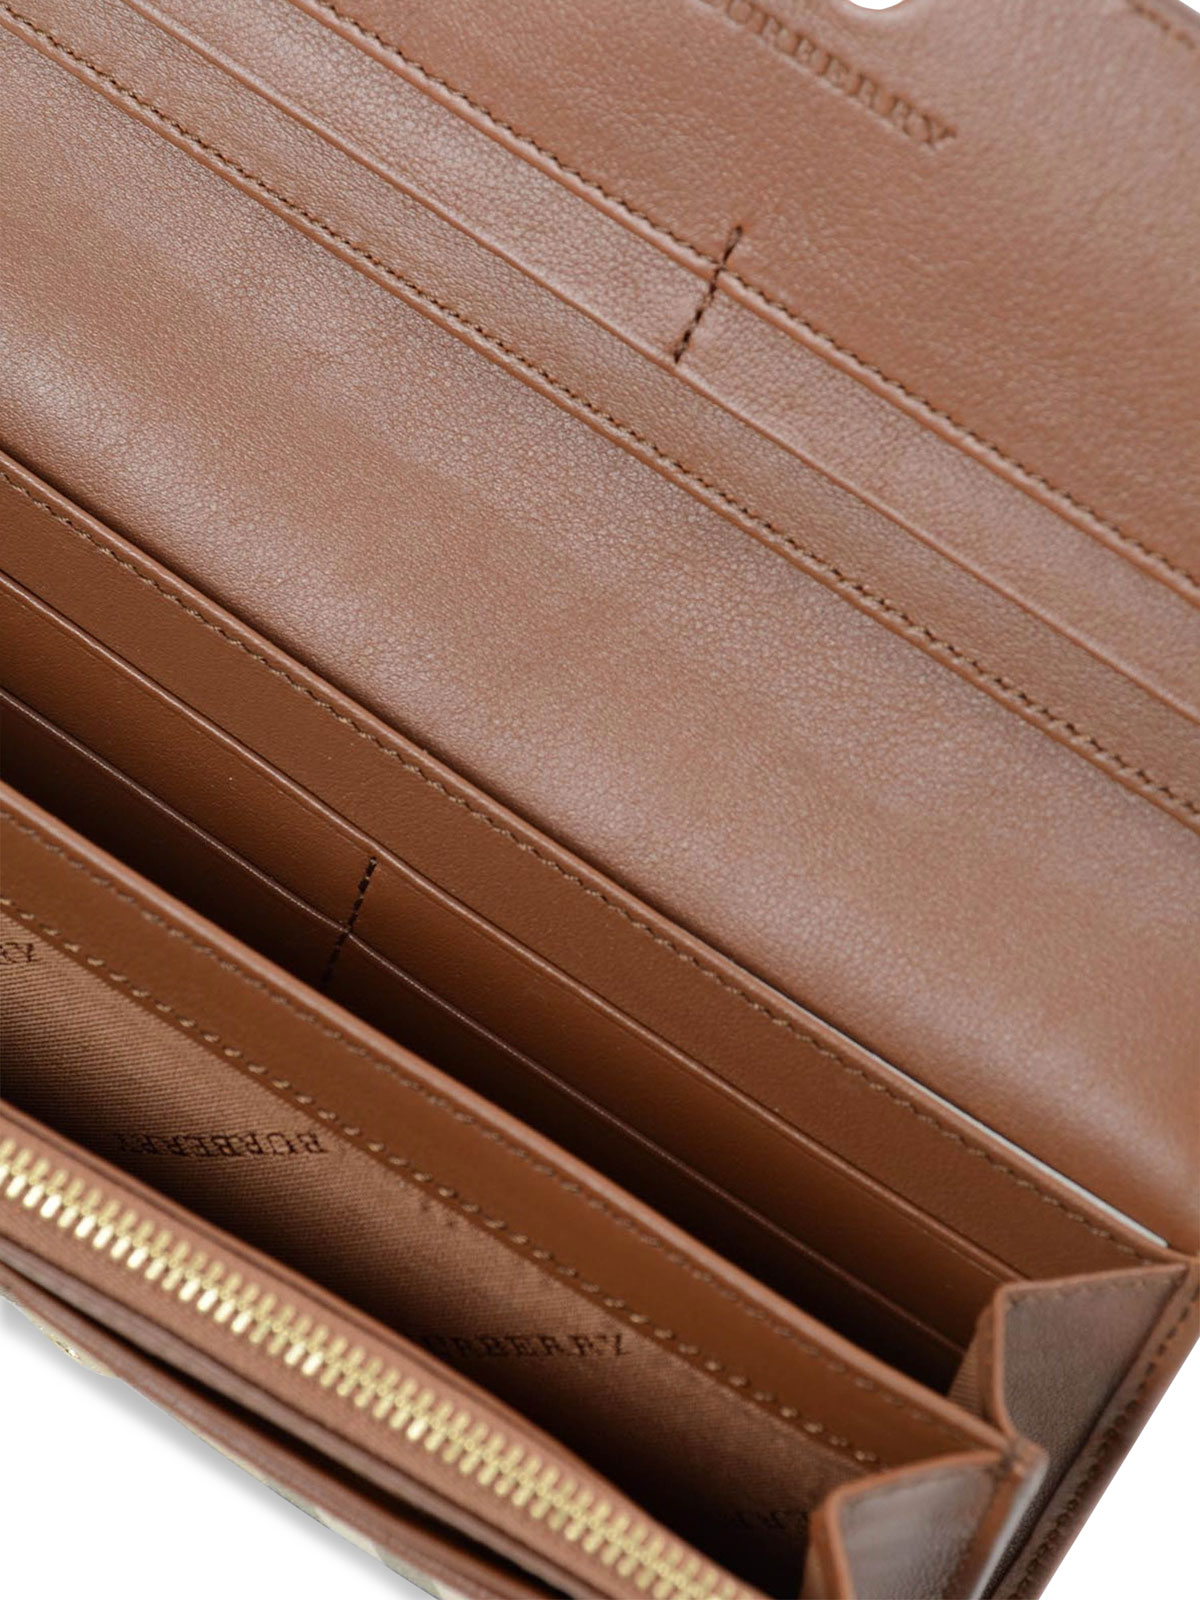 burberry brown wallet